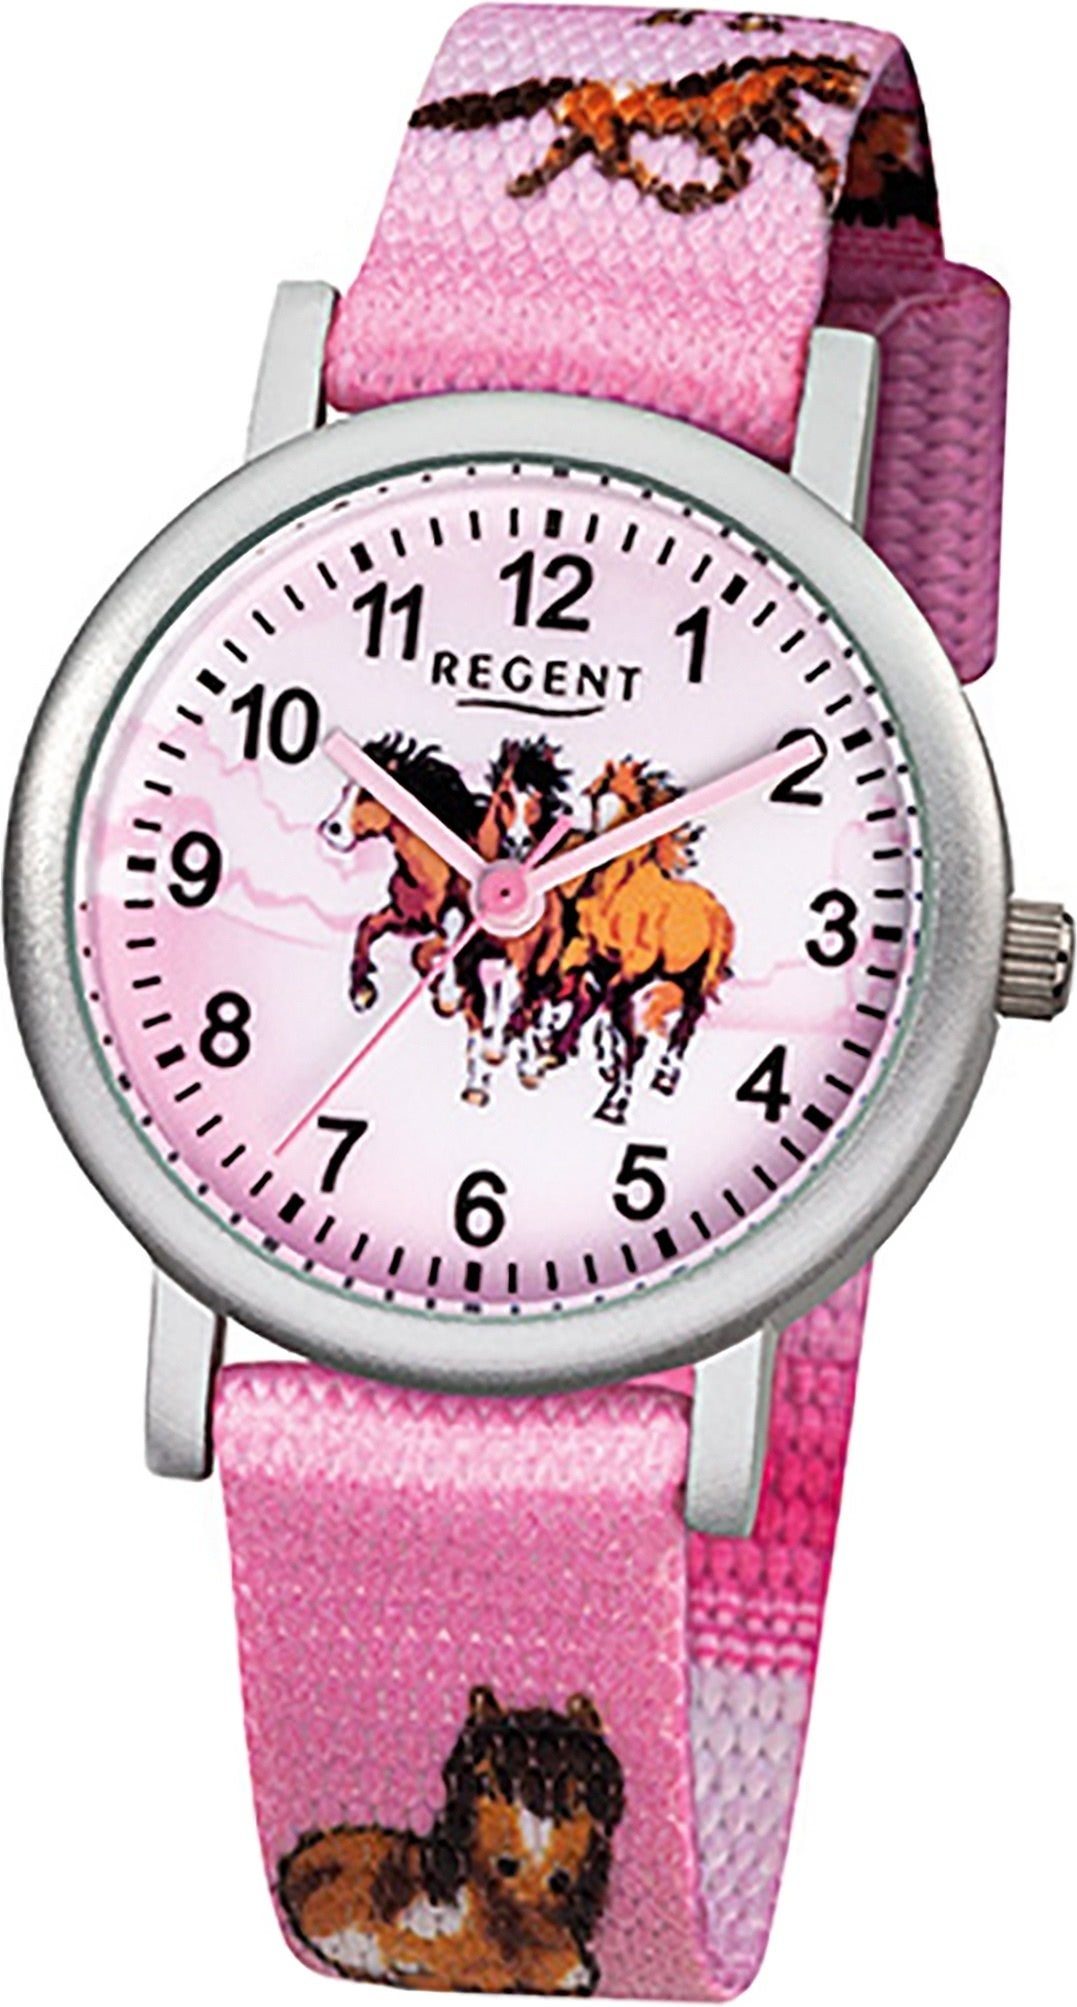 Regent Quarzuhr Regent Textil Kinder Uhr F-729 Quarzuhr, Kinderuhr Textilarmband rosa, rundes Gehäuse, klein (ca. 29mm)